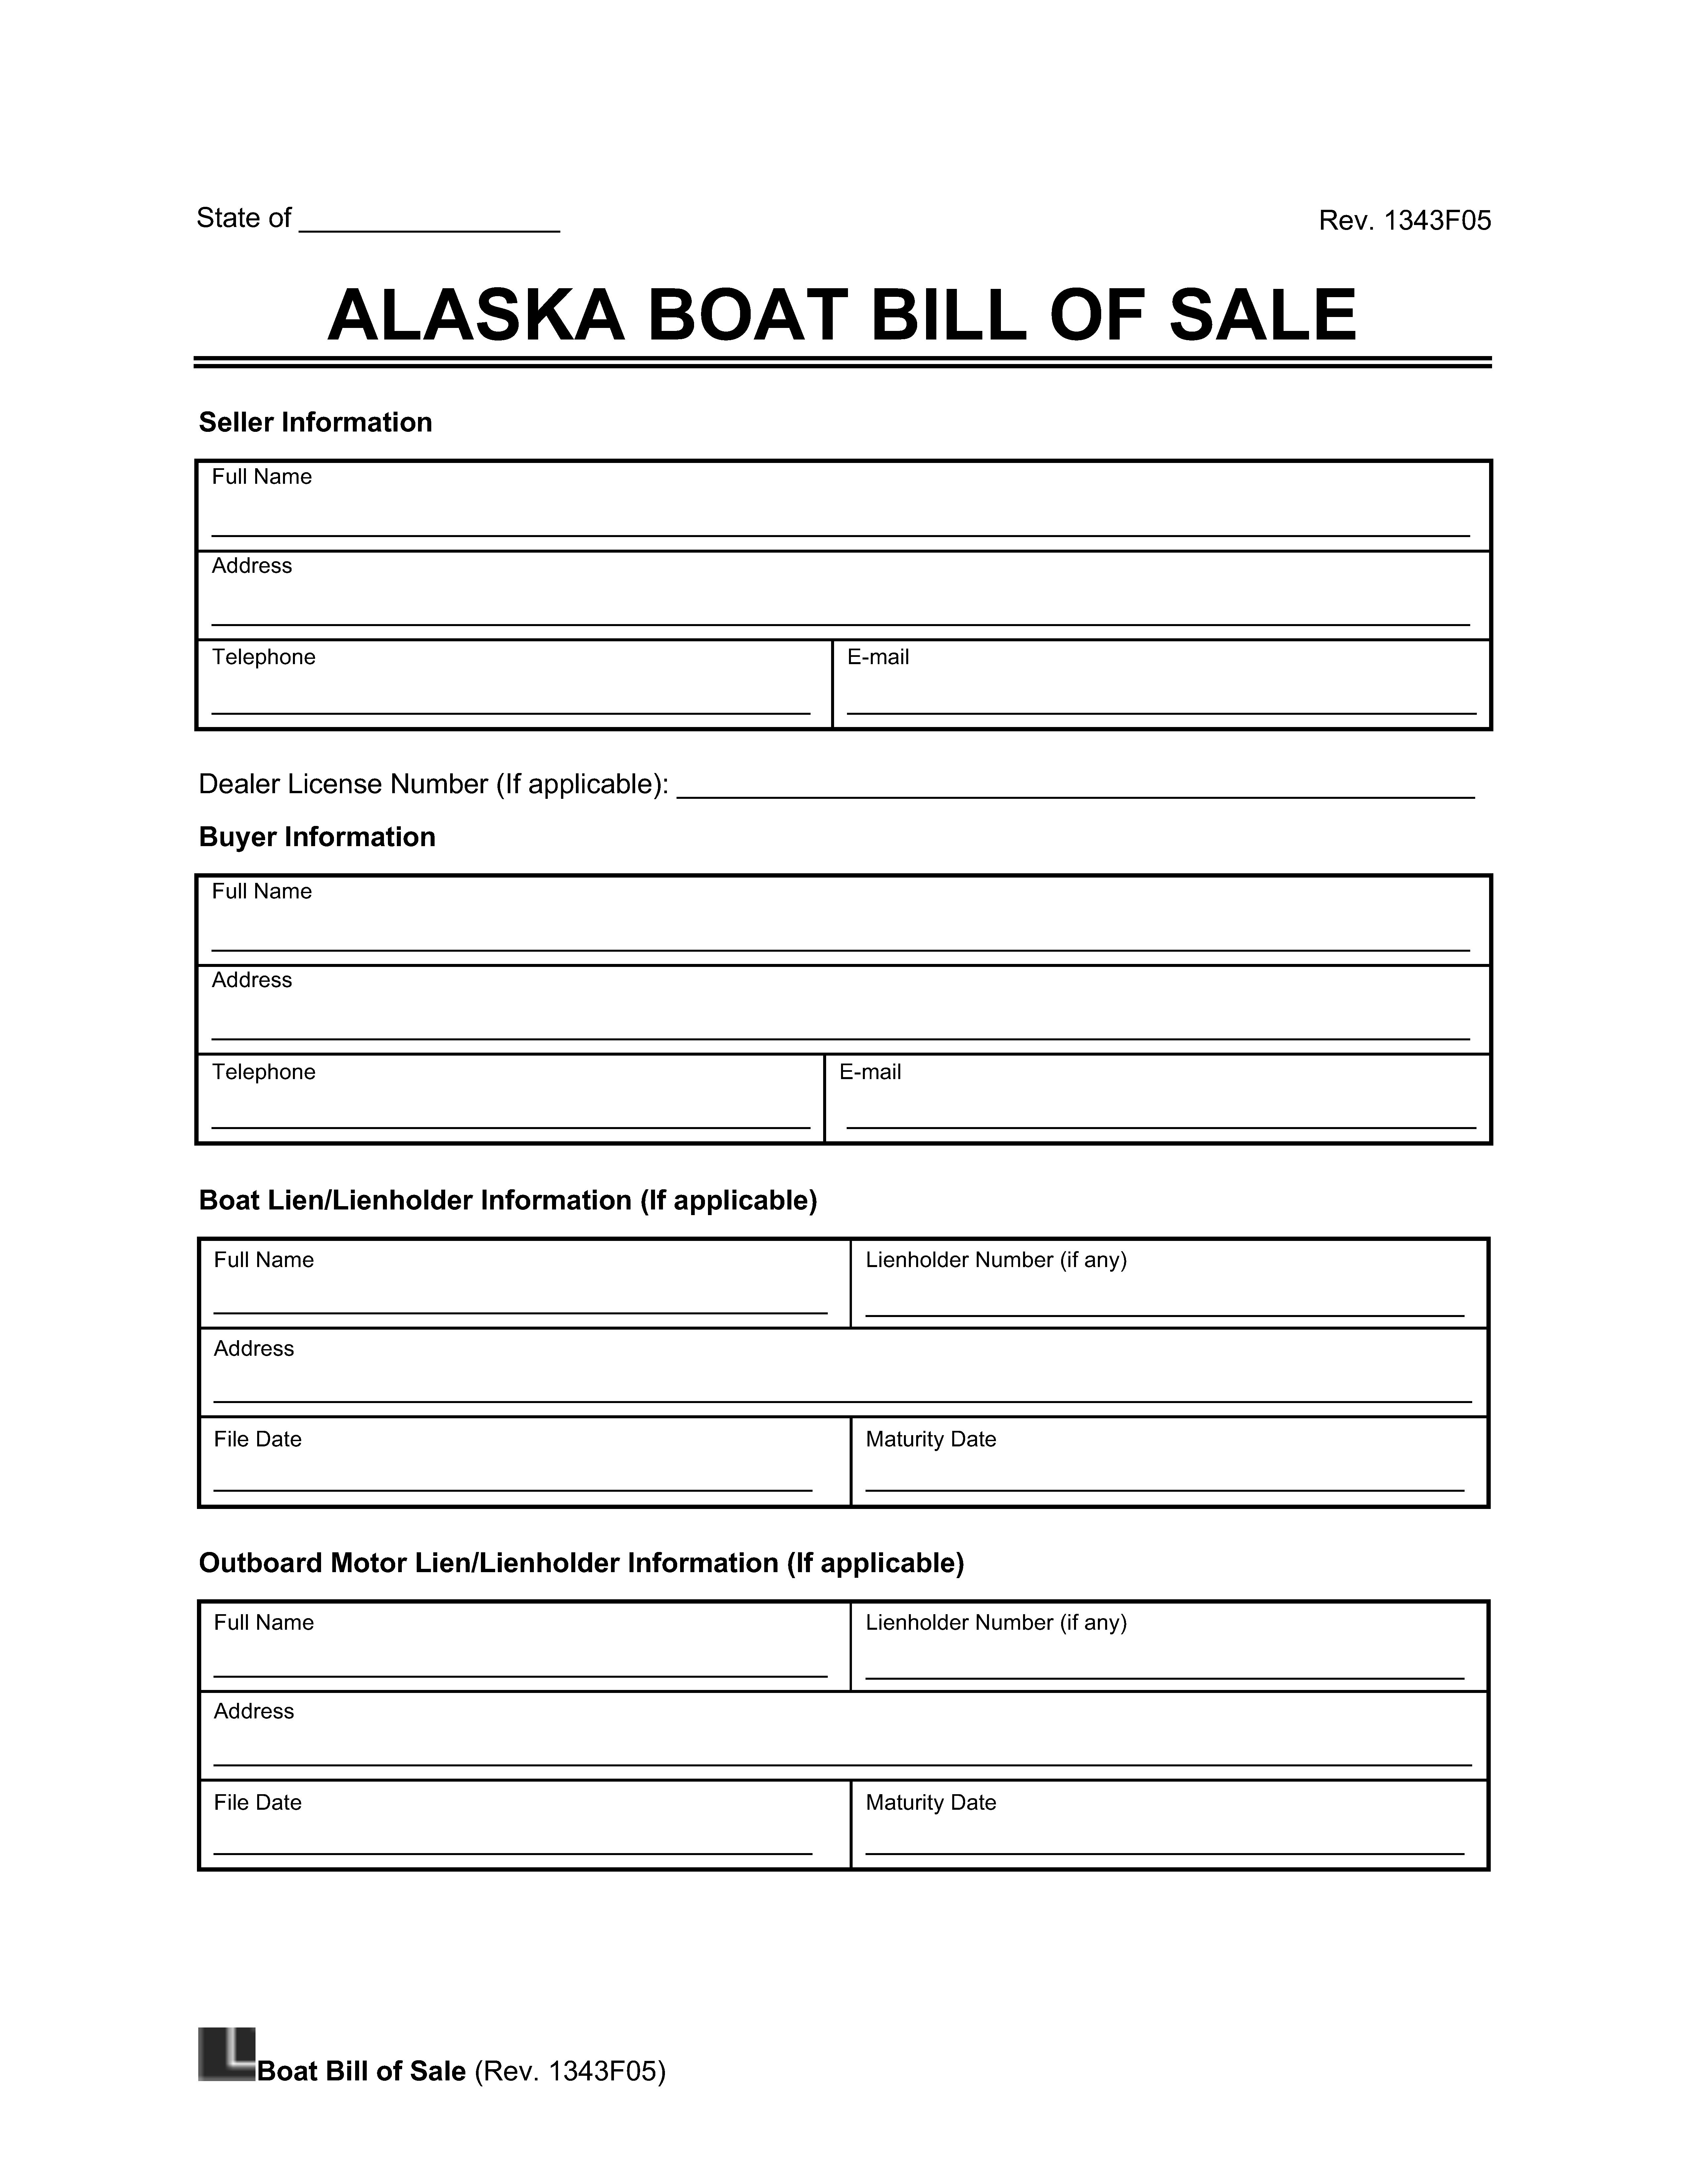 Boat Bill of Sale Alaska Screenshot